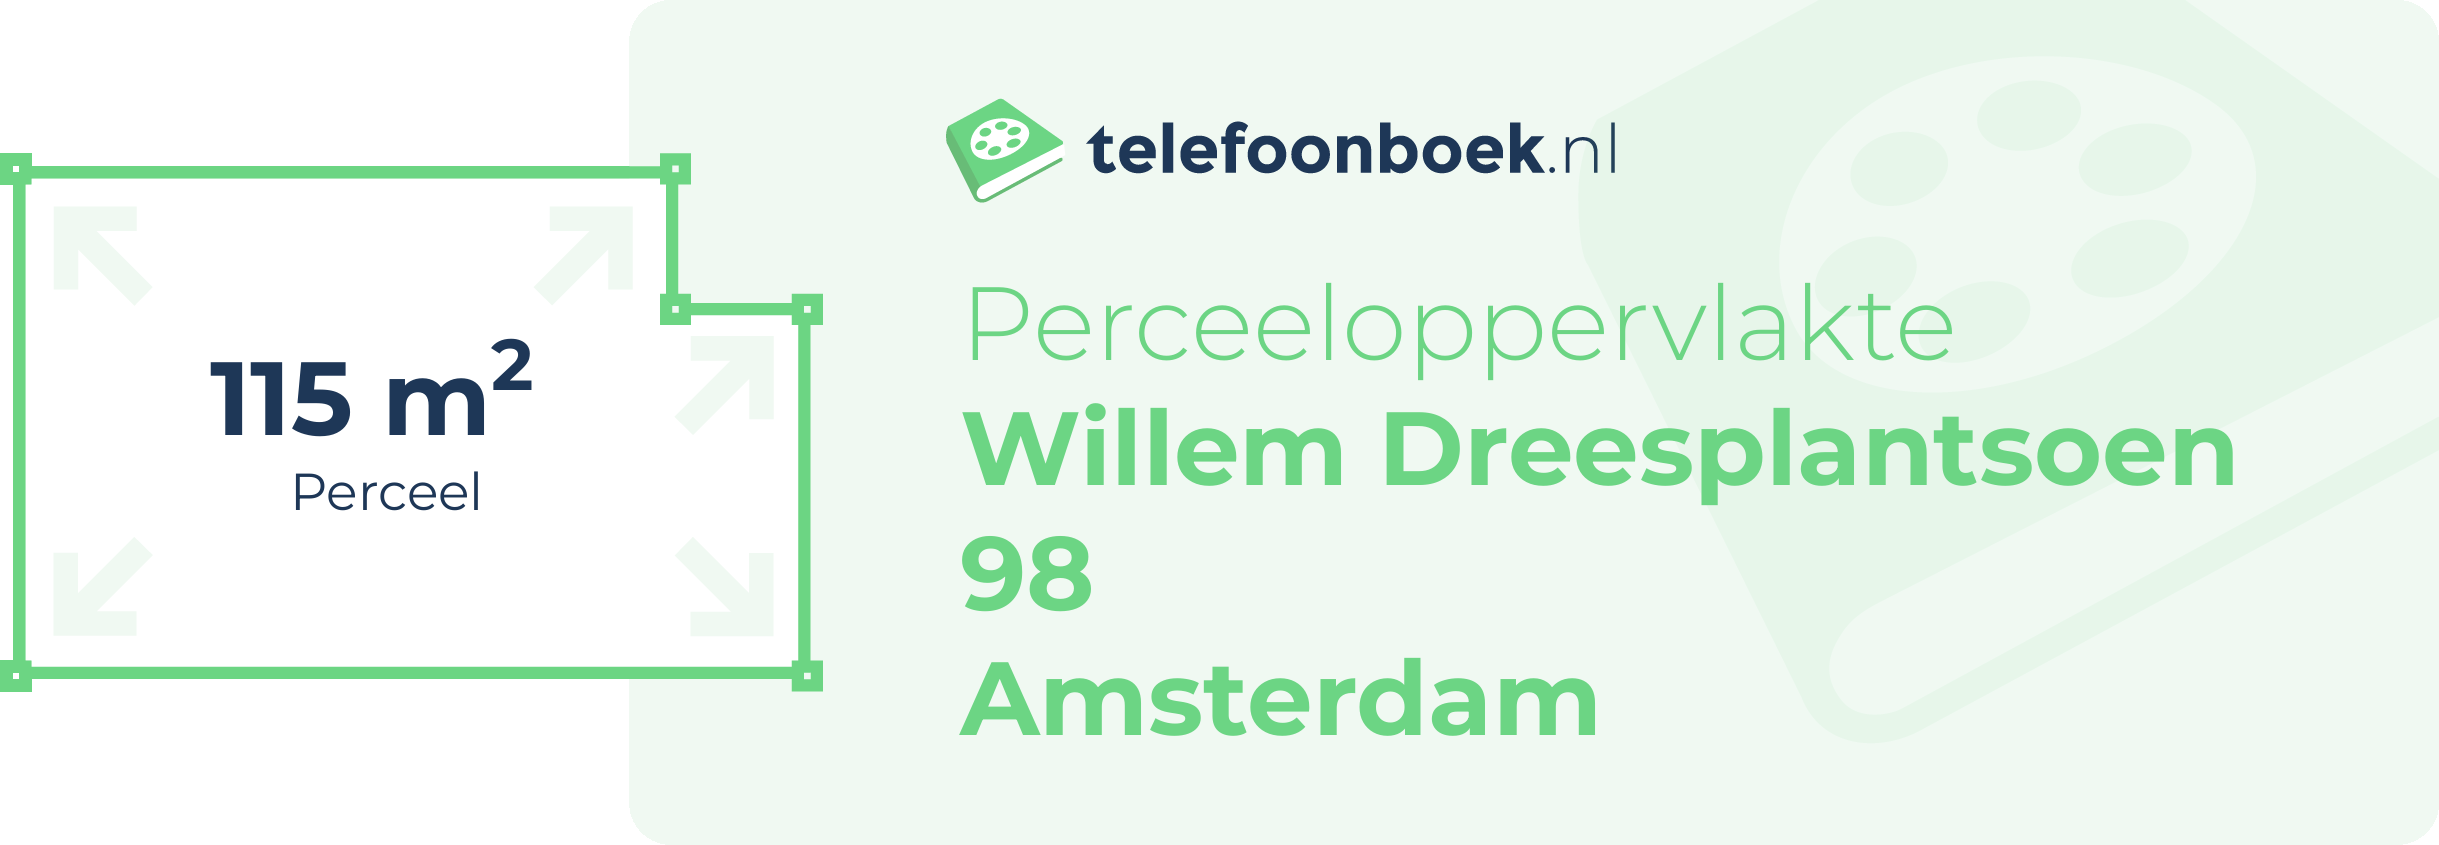 Perceeloppervlakte Willem Dreesplantsoen 98 Amsterdam